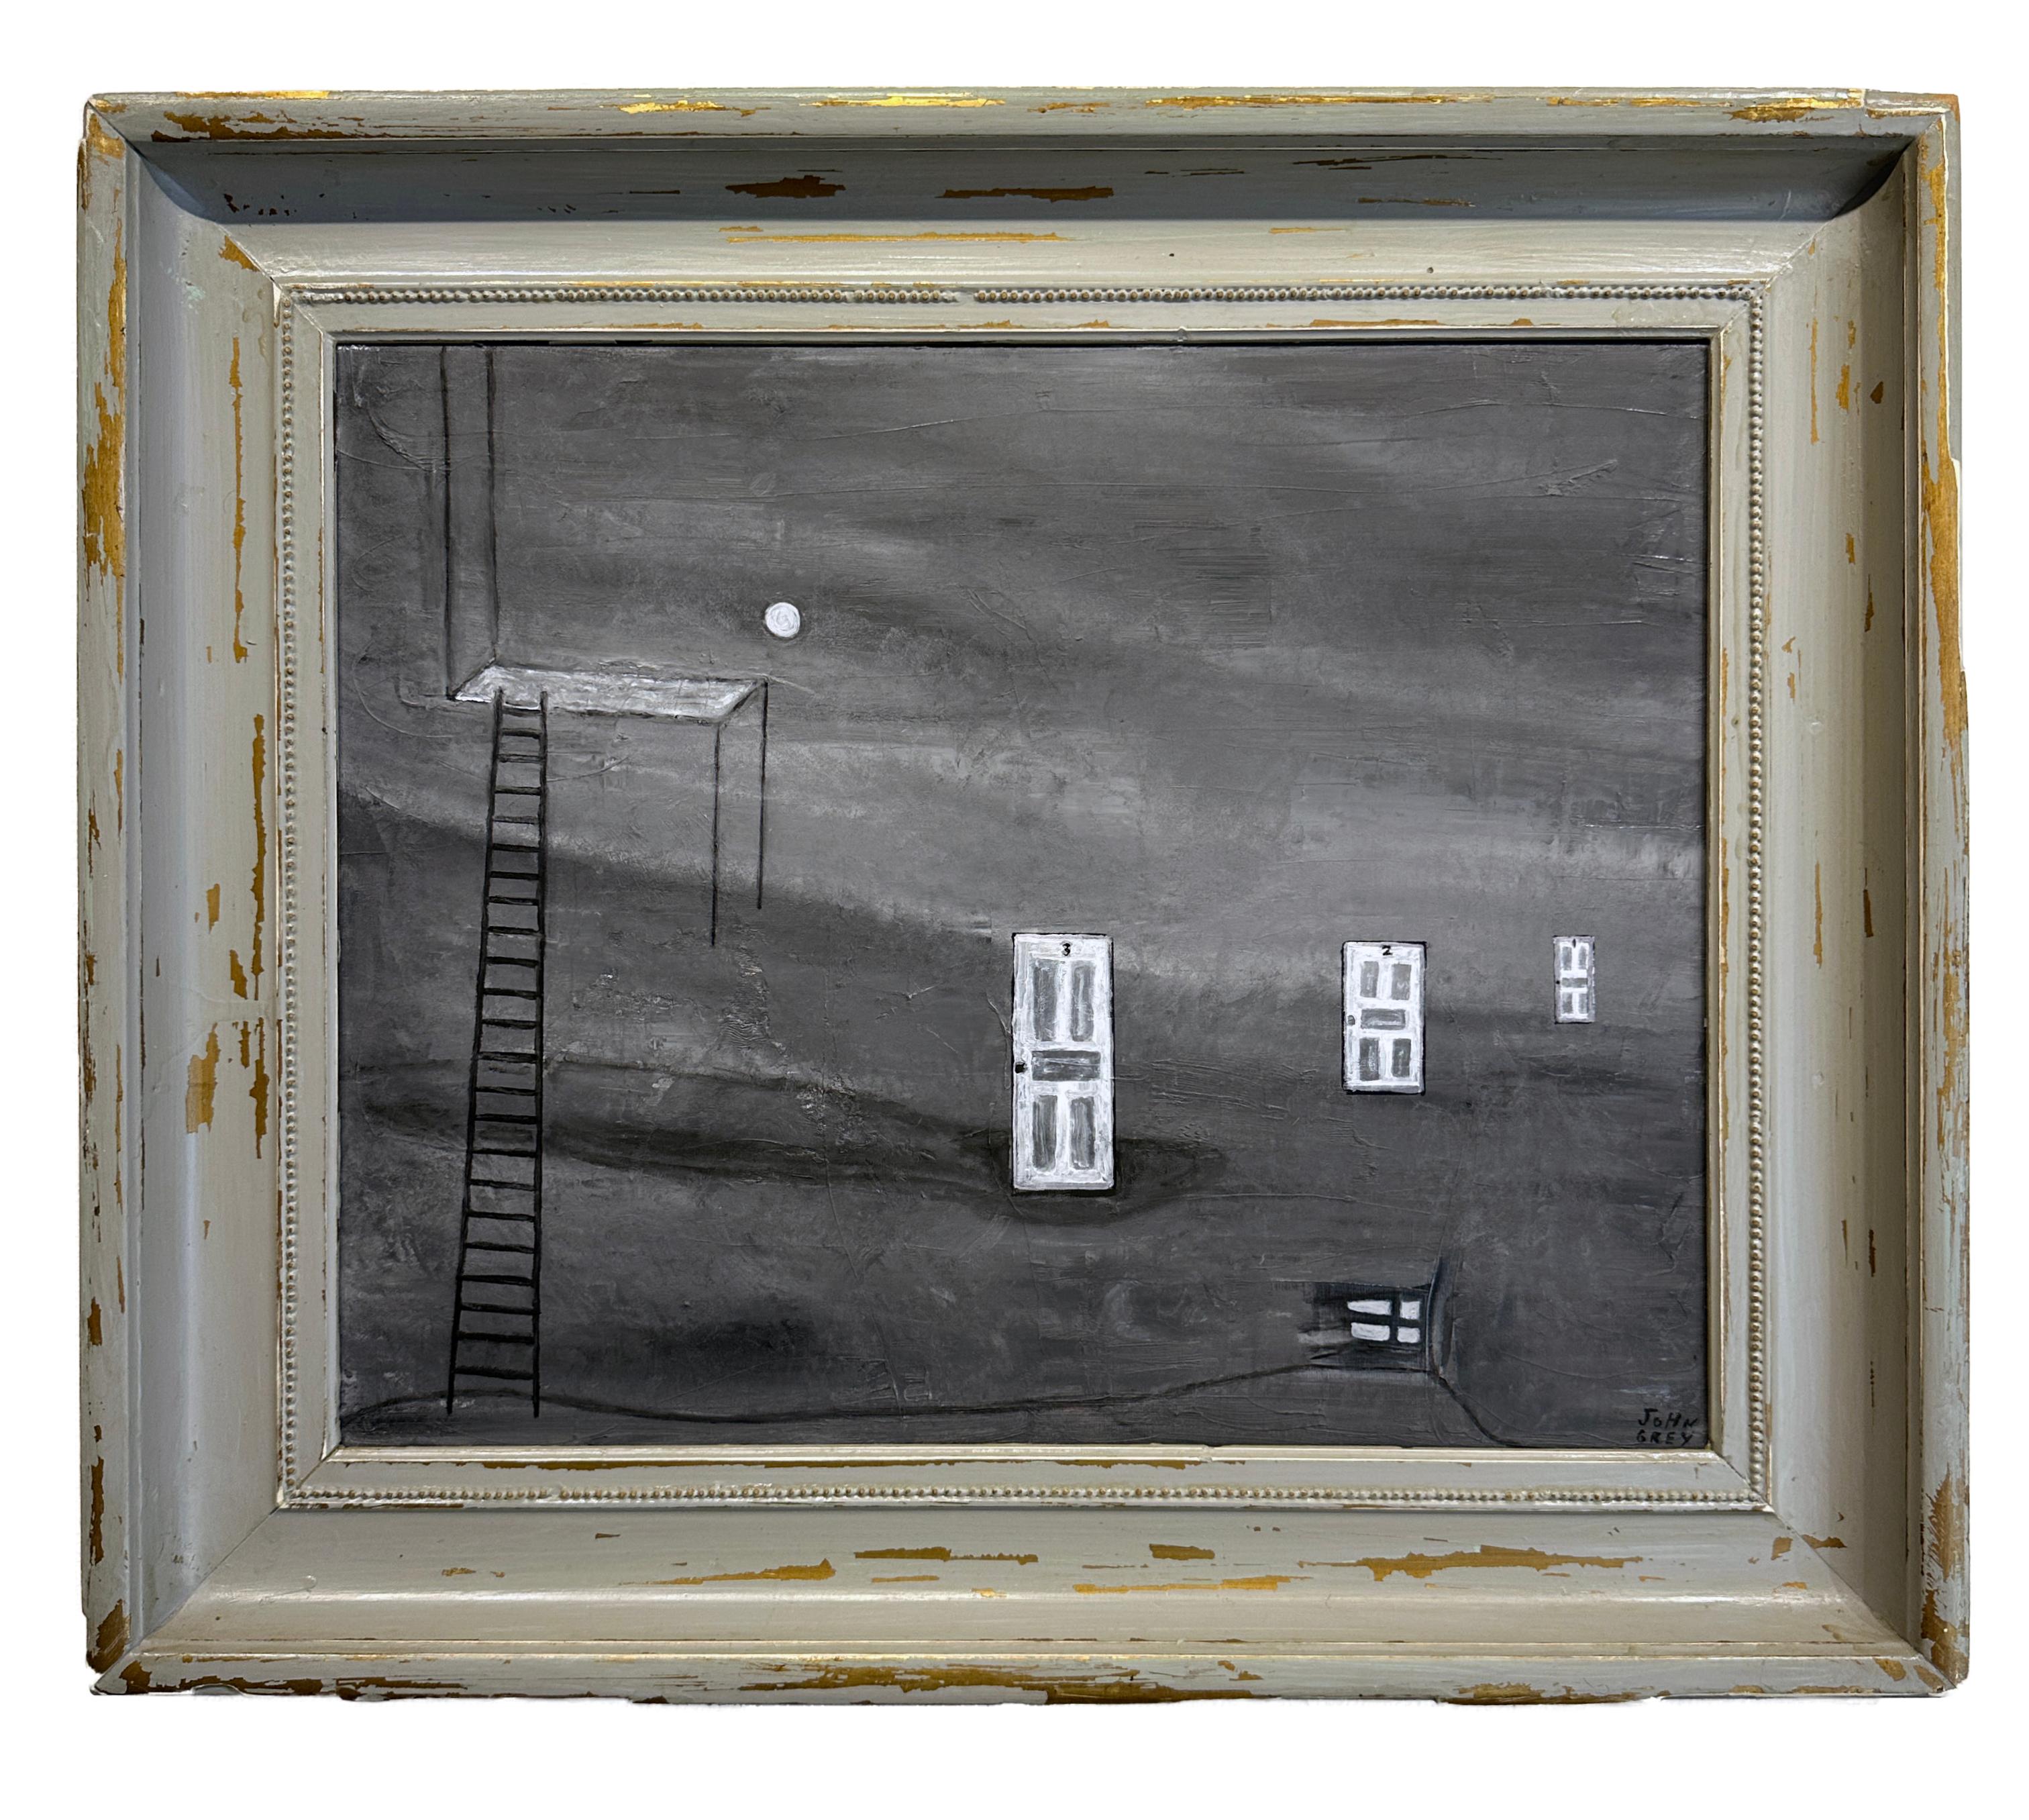 John Seubert Abstract Painting – Echo – Monochrome Szene, Leiter und Türen in gedämpftem Grau, Original Öl, gerahmt